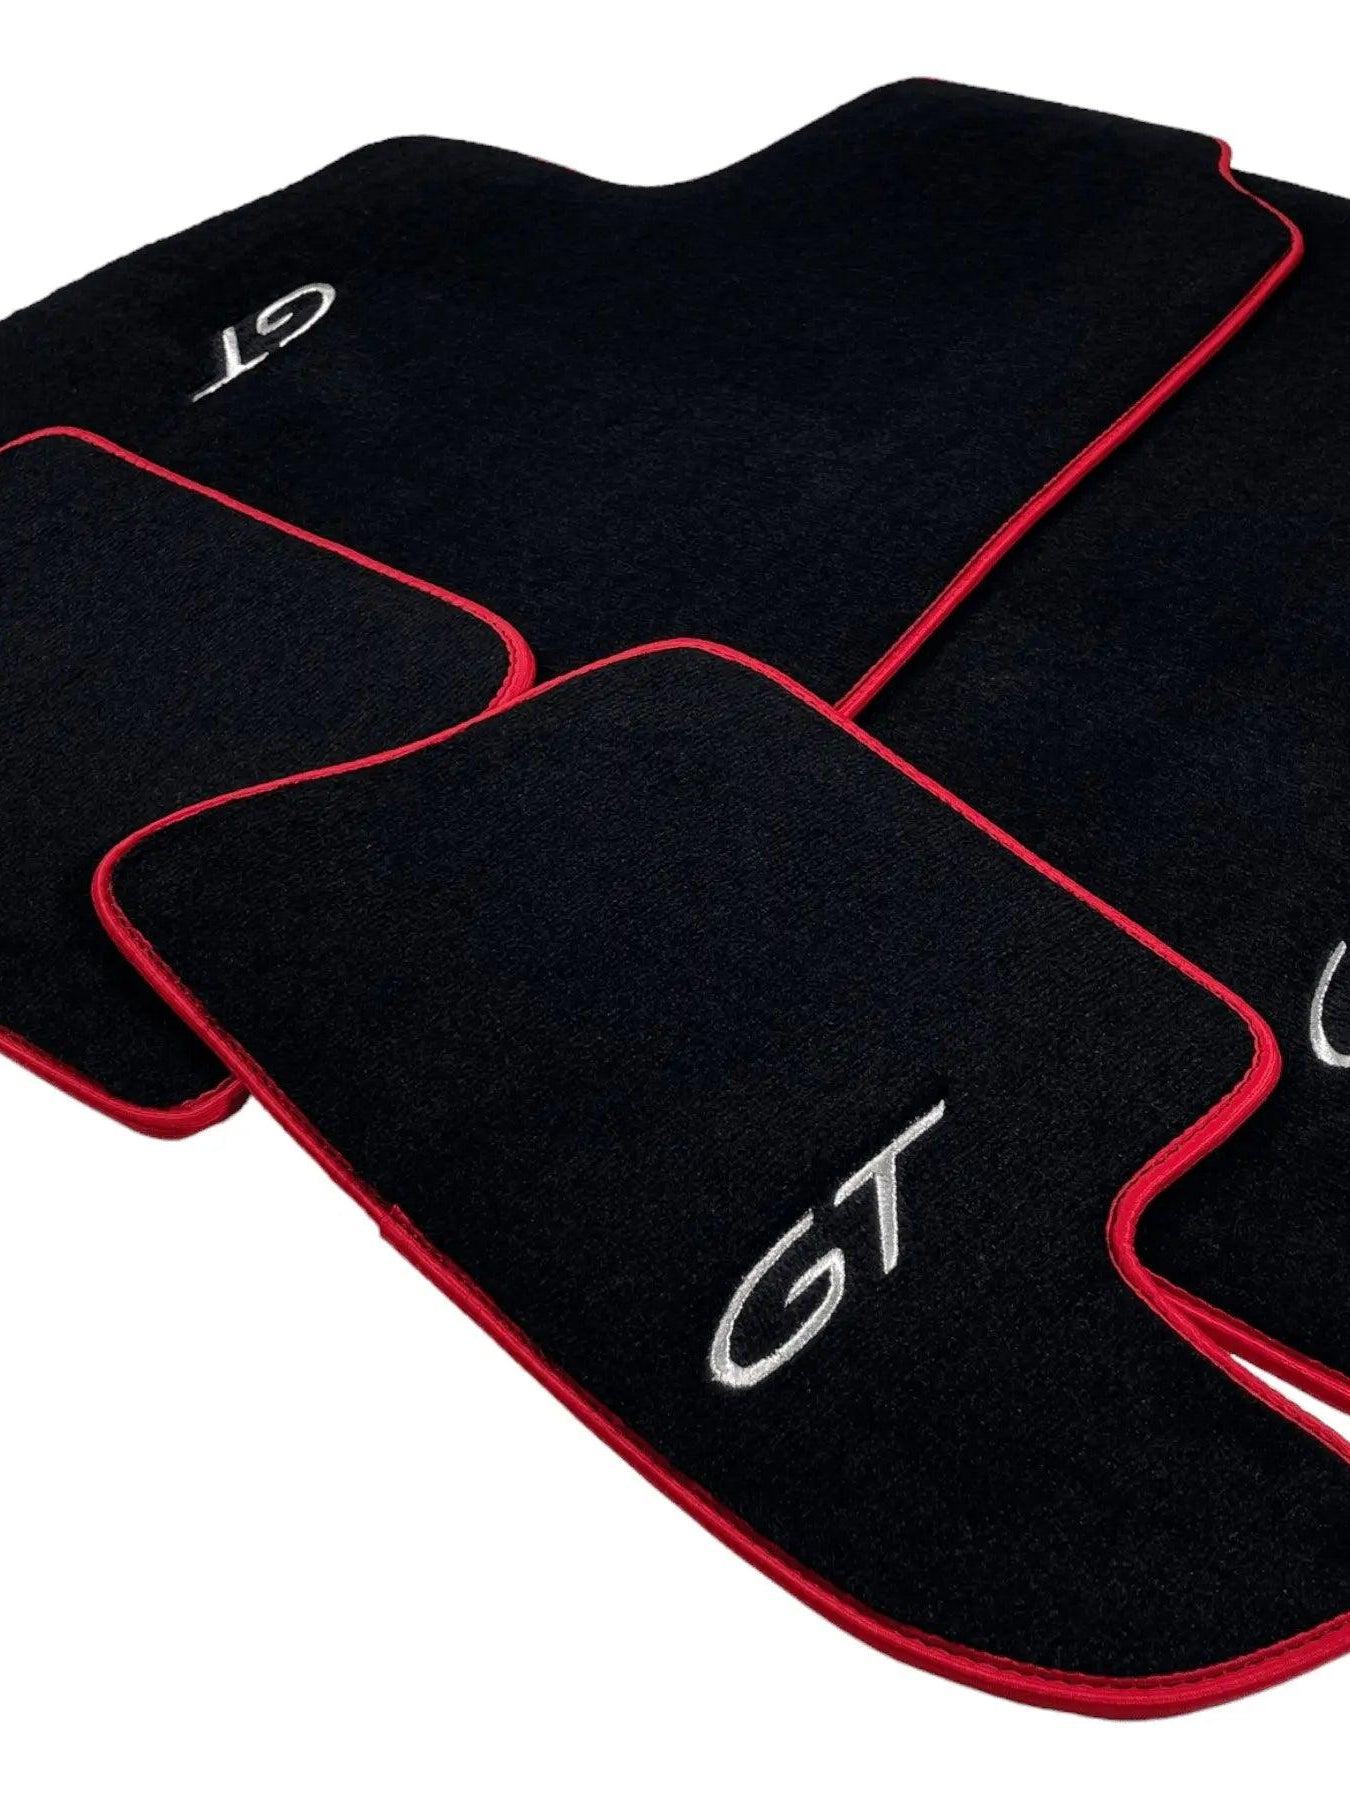 Black Floor Mats For Bentley Continental Gt 20042017 With Red Trim - AutoWin